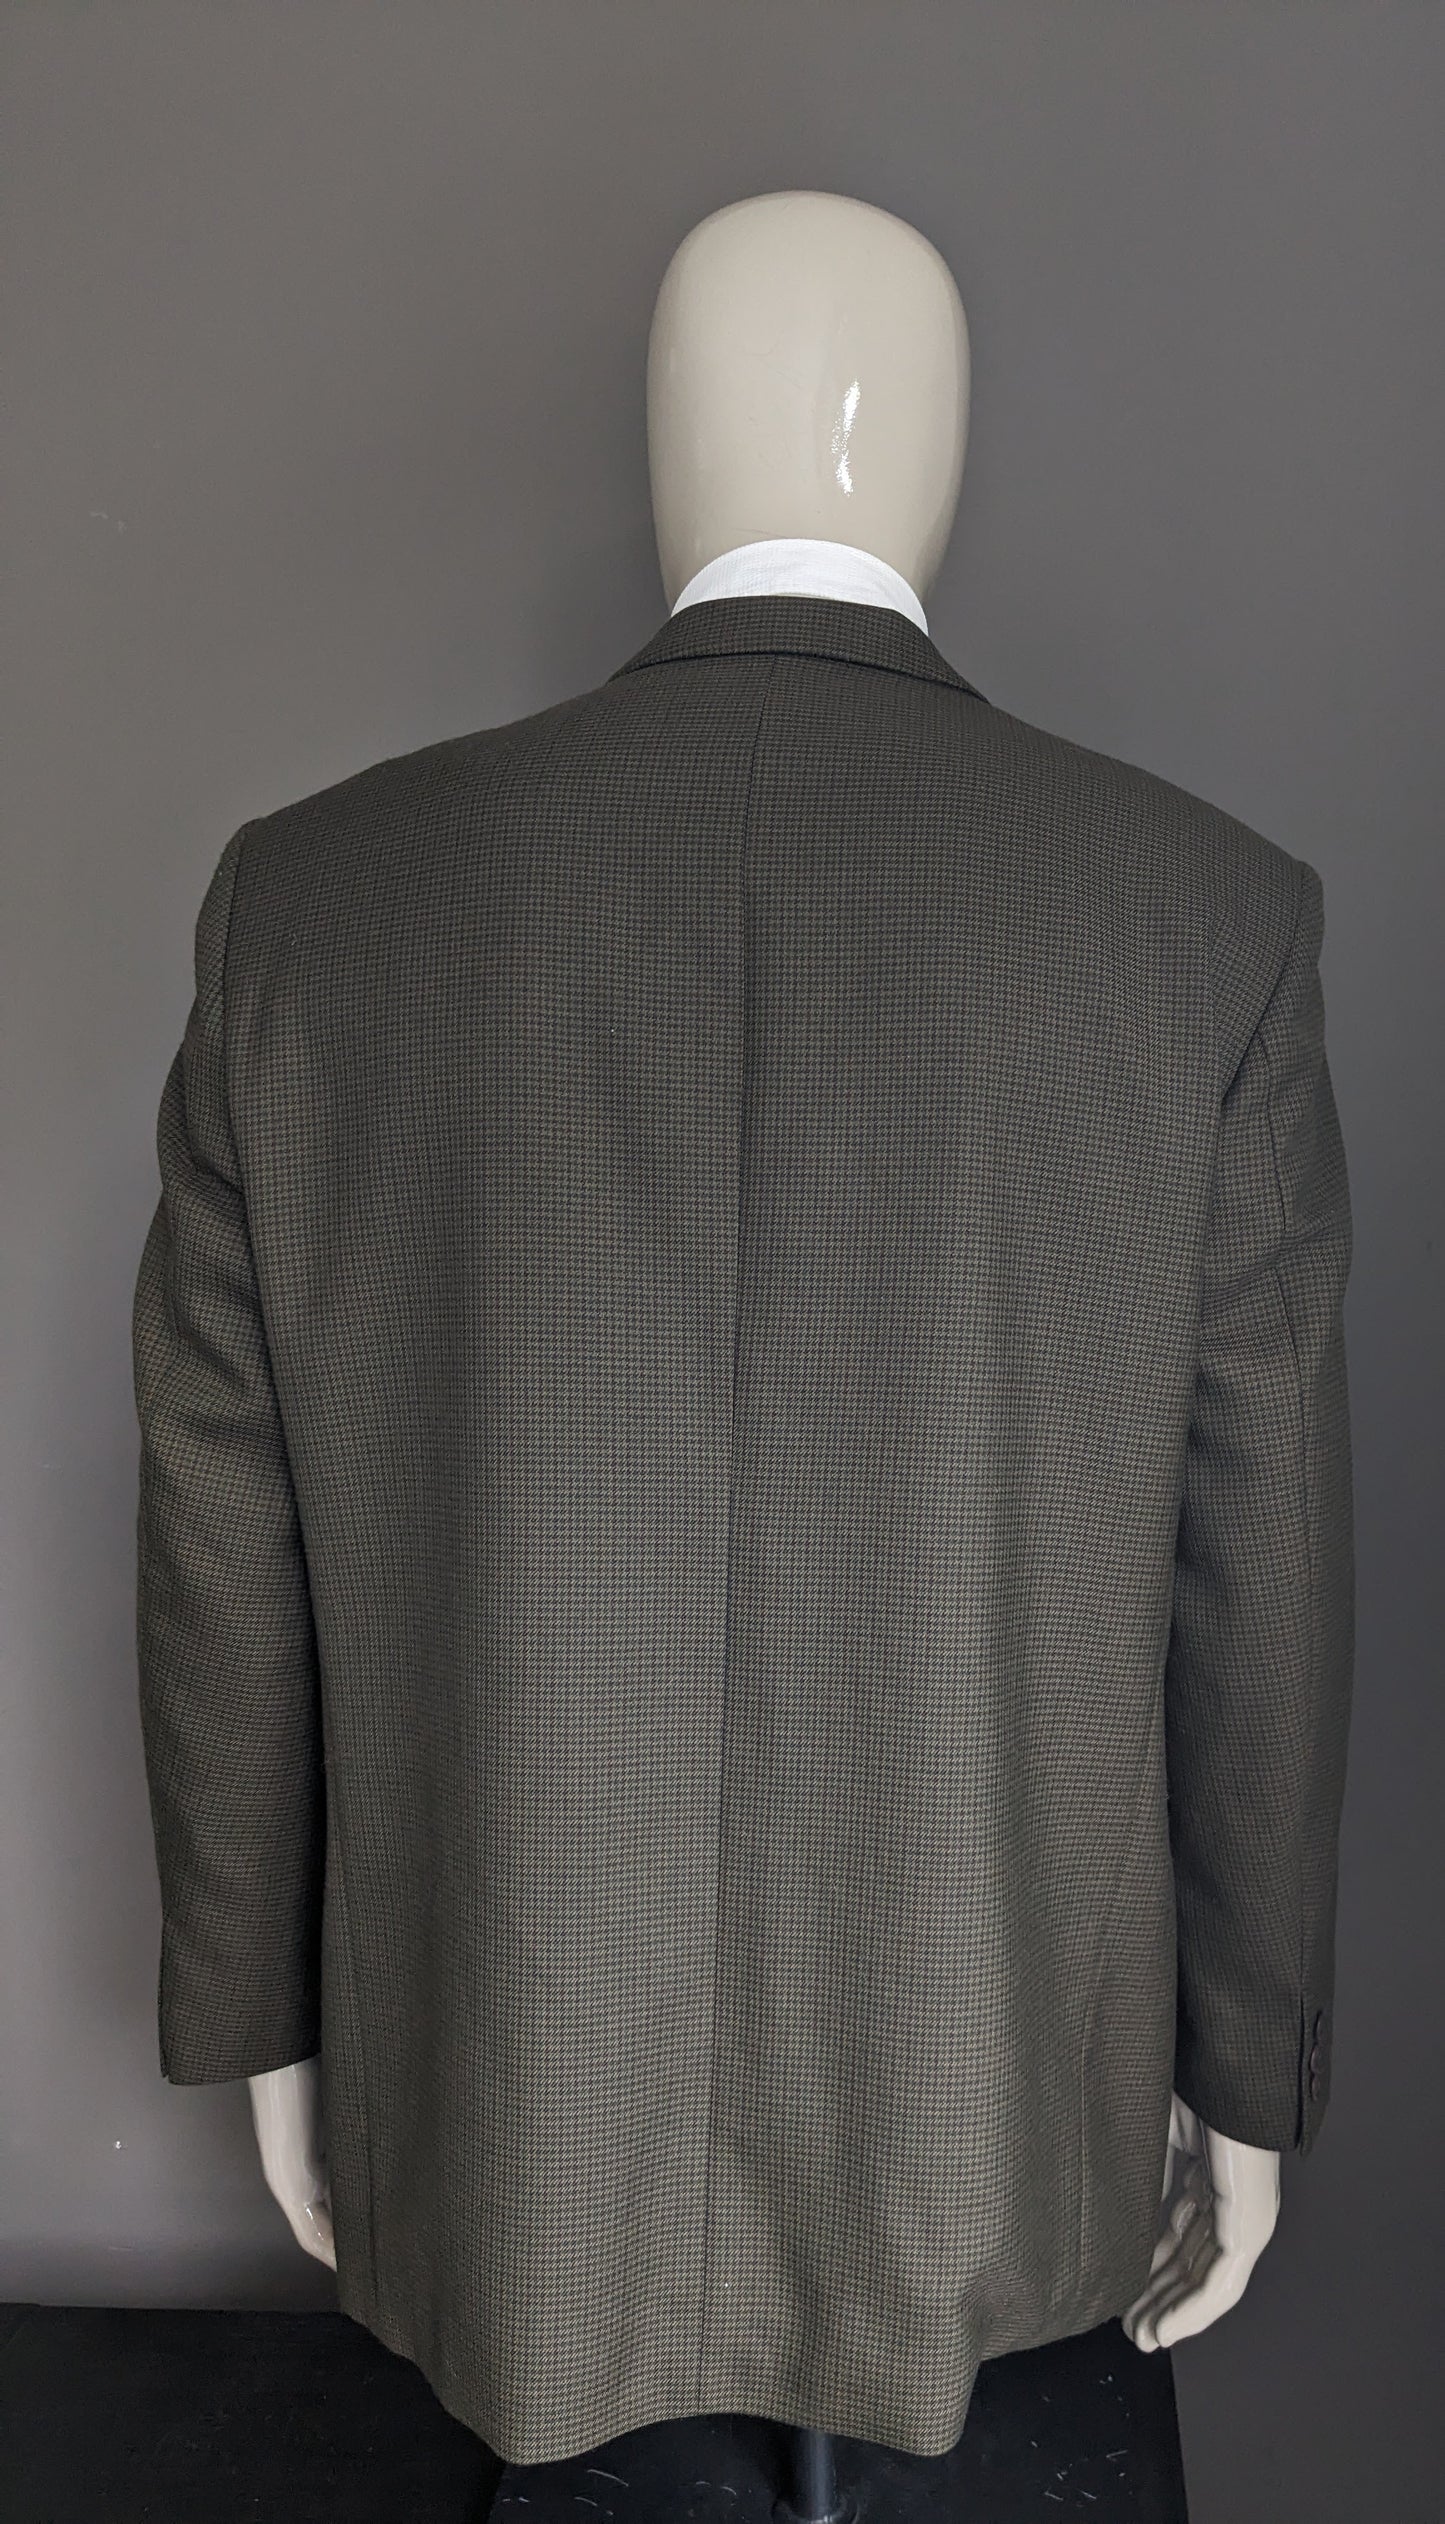 Sergio Albani woolen jacket. Green Bordeaux motif. Size 54 / L.